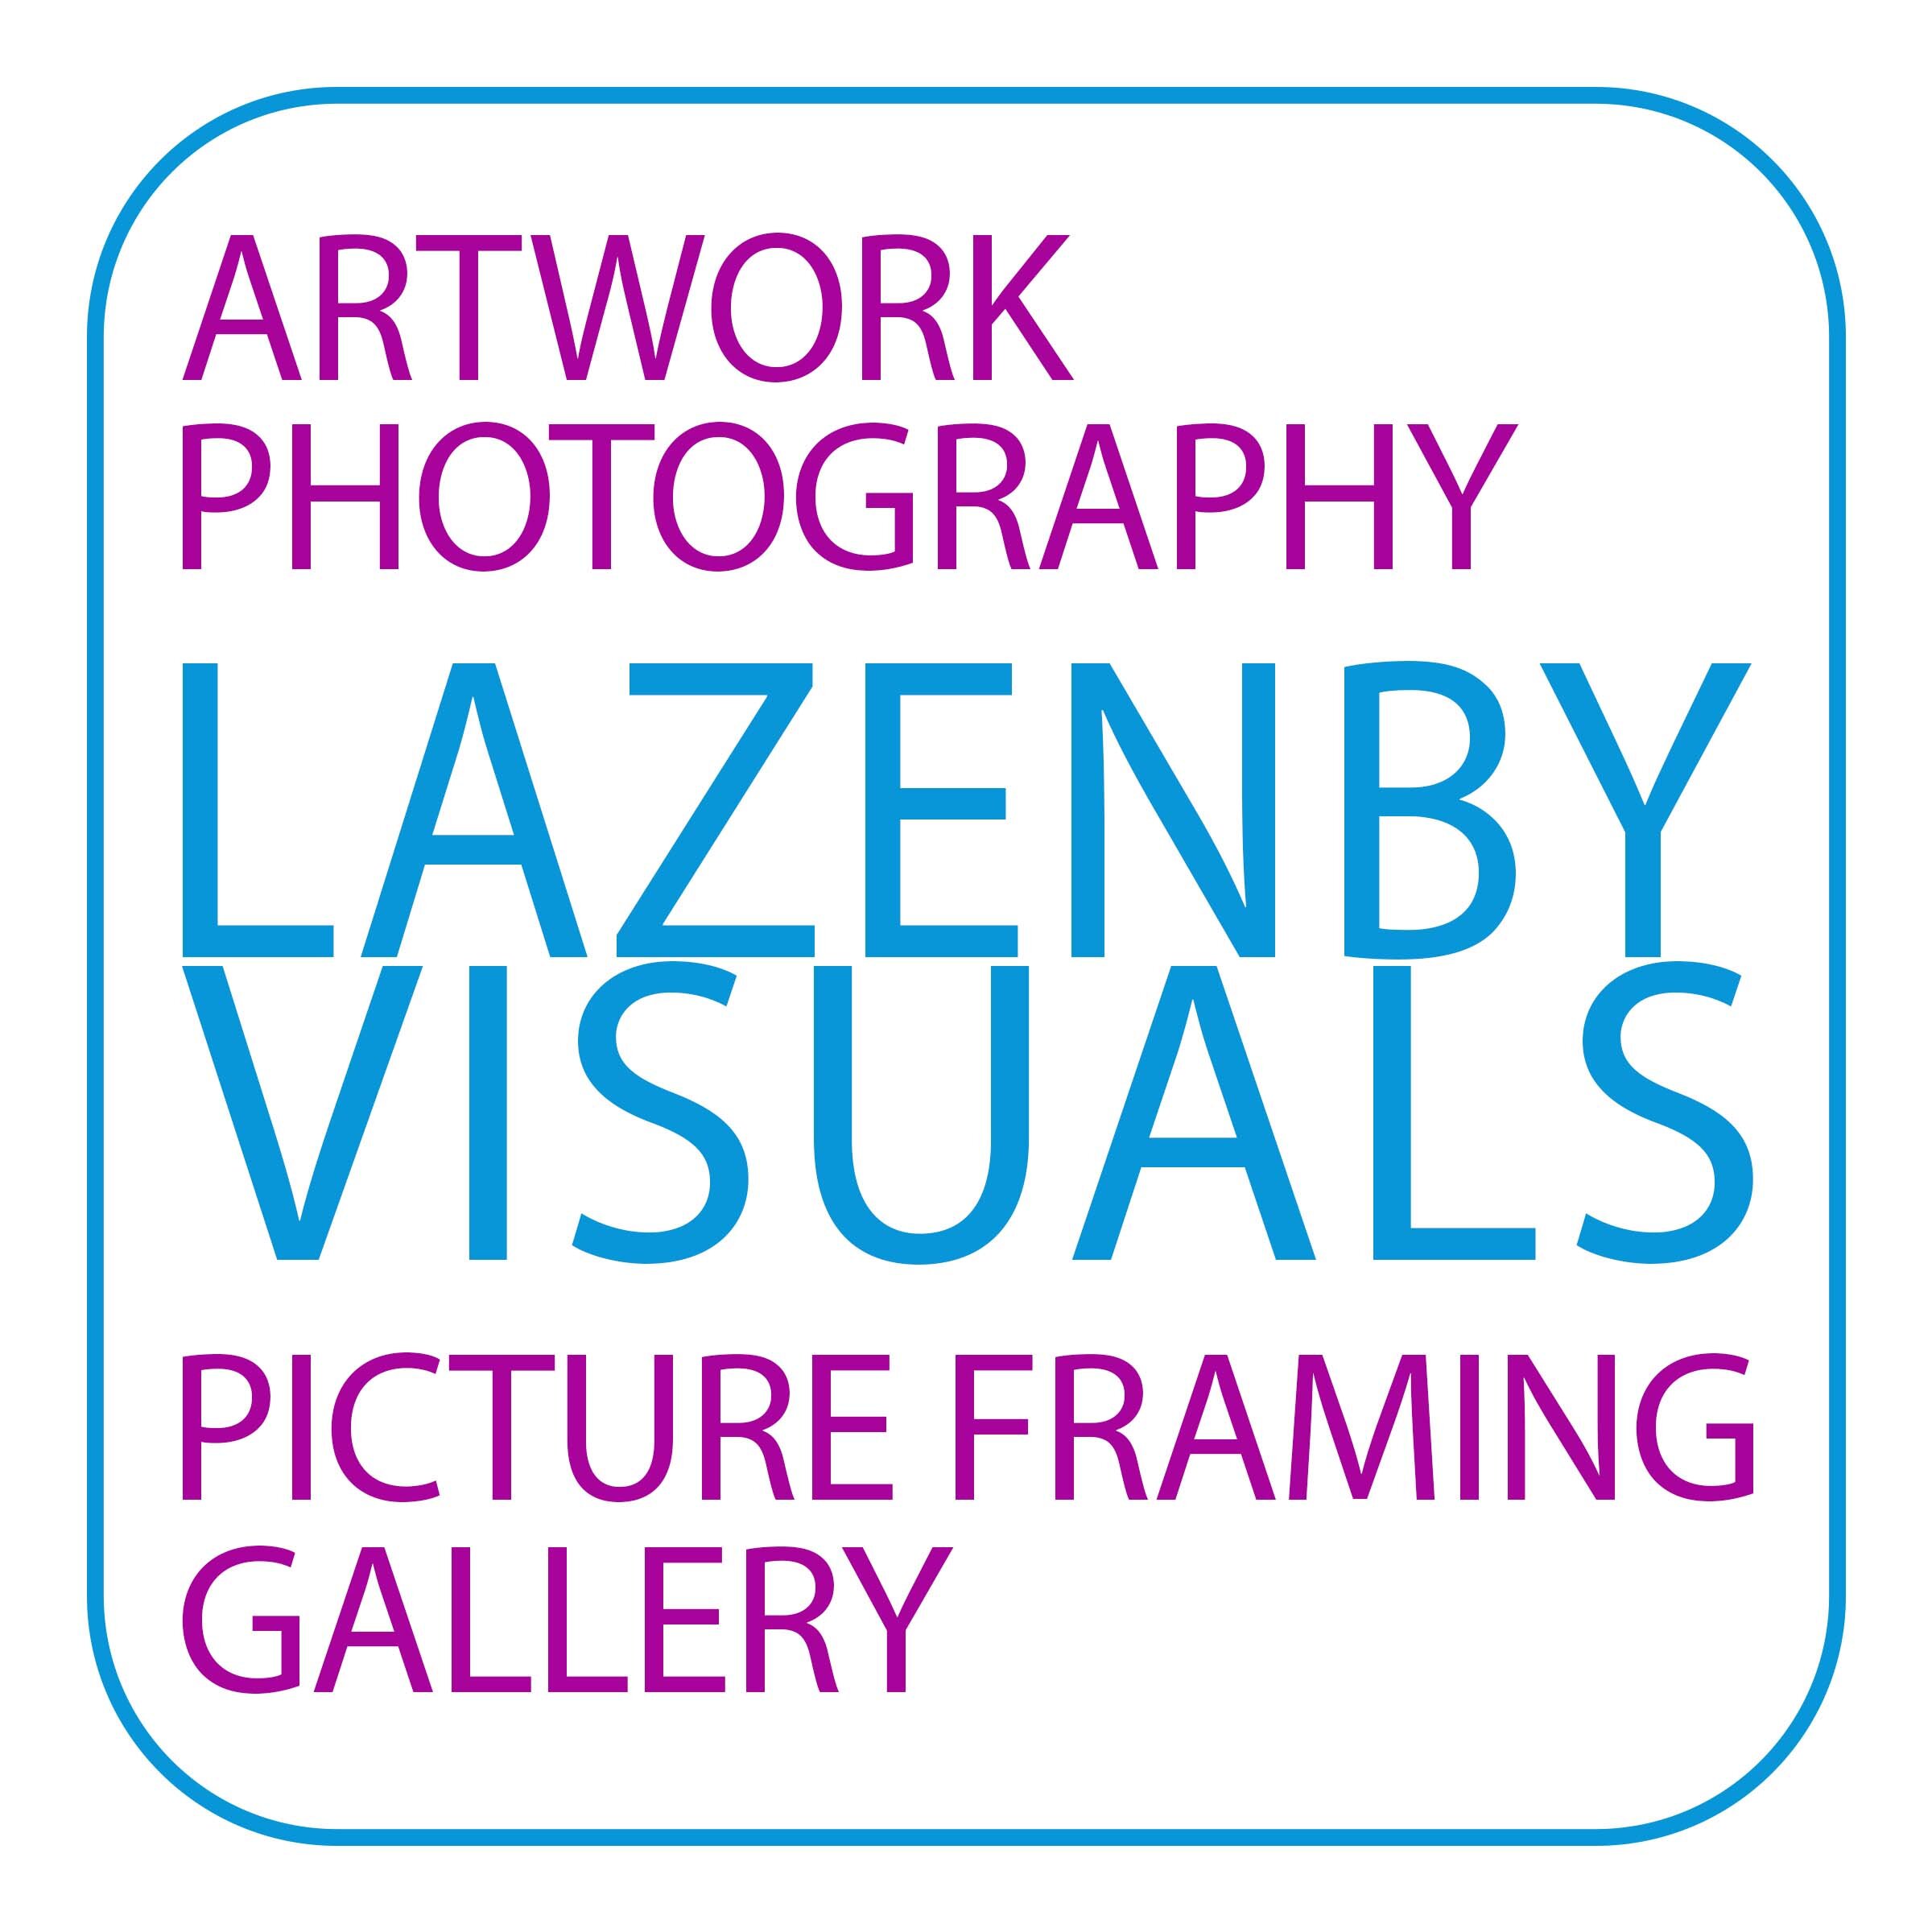 Lazenby Visuals